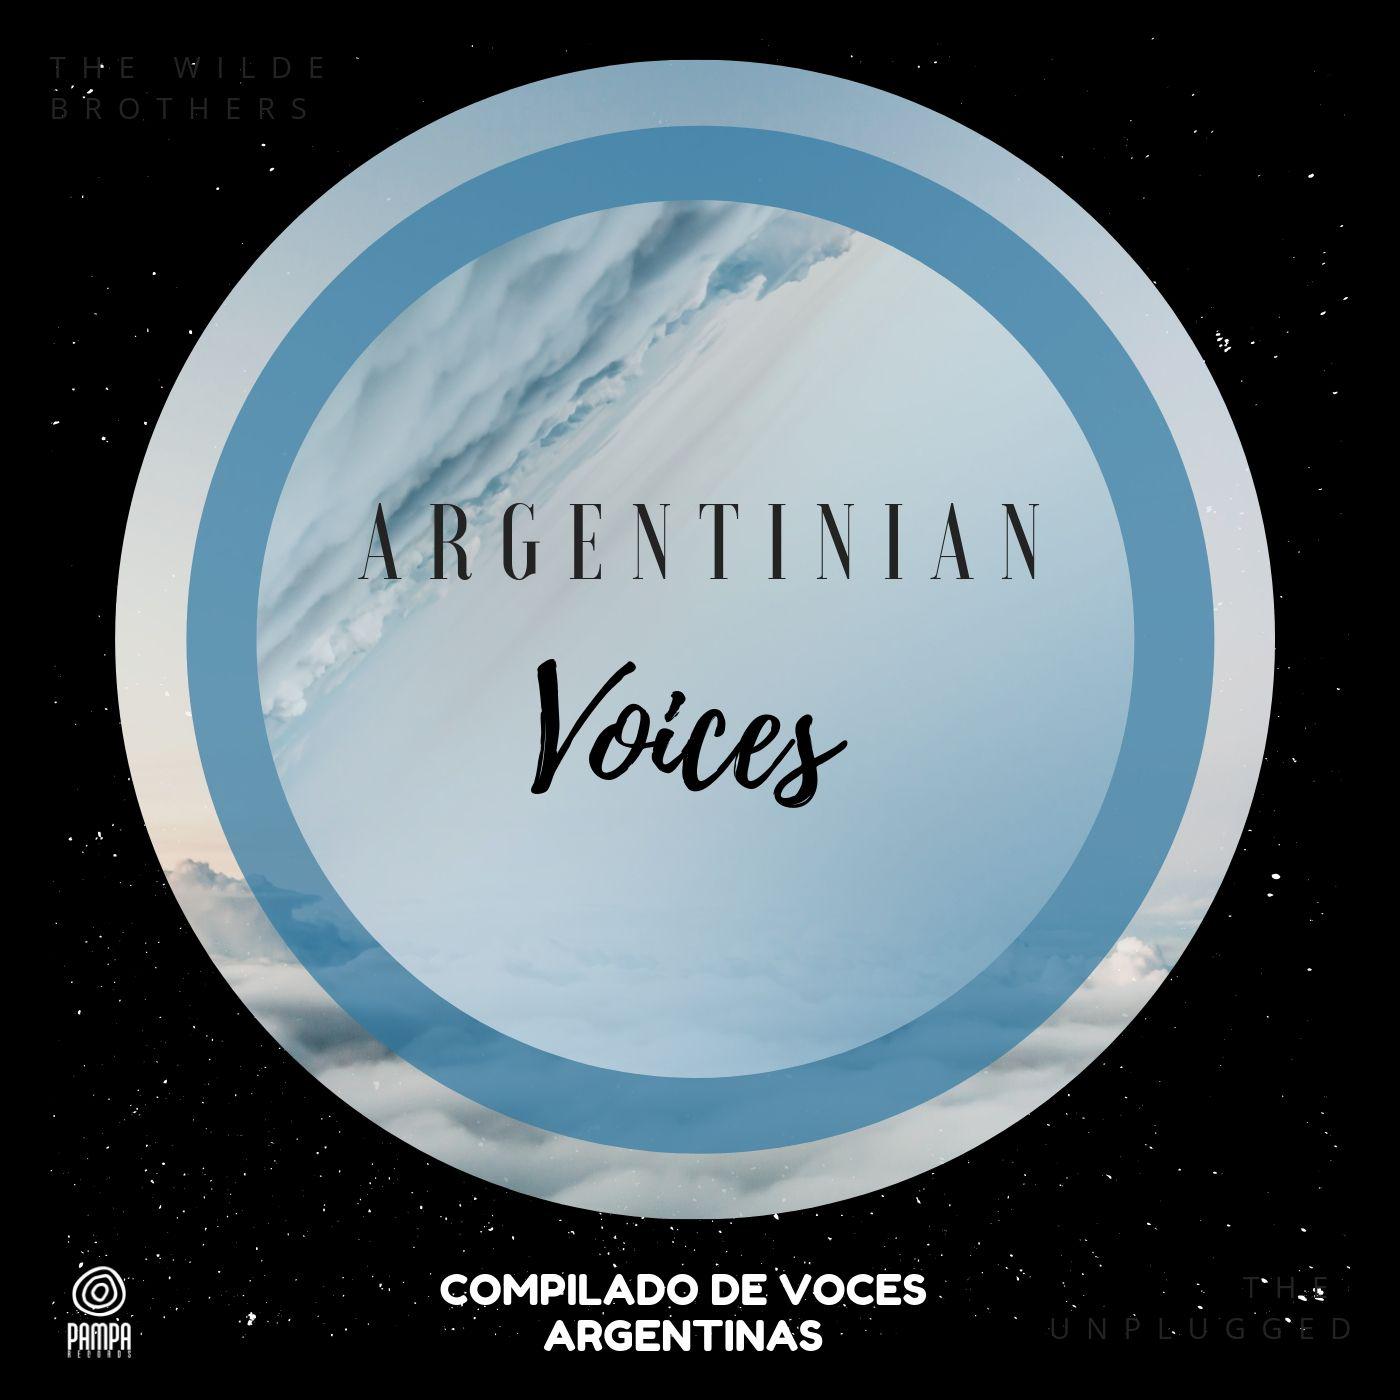 Argentinian Voices (Compilado de Voces Argentinas)